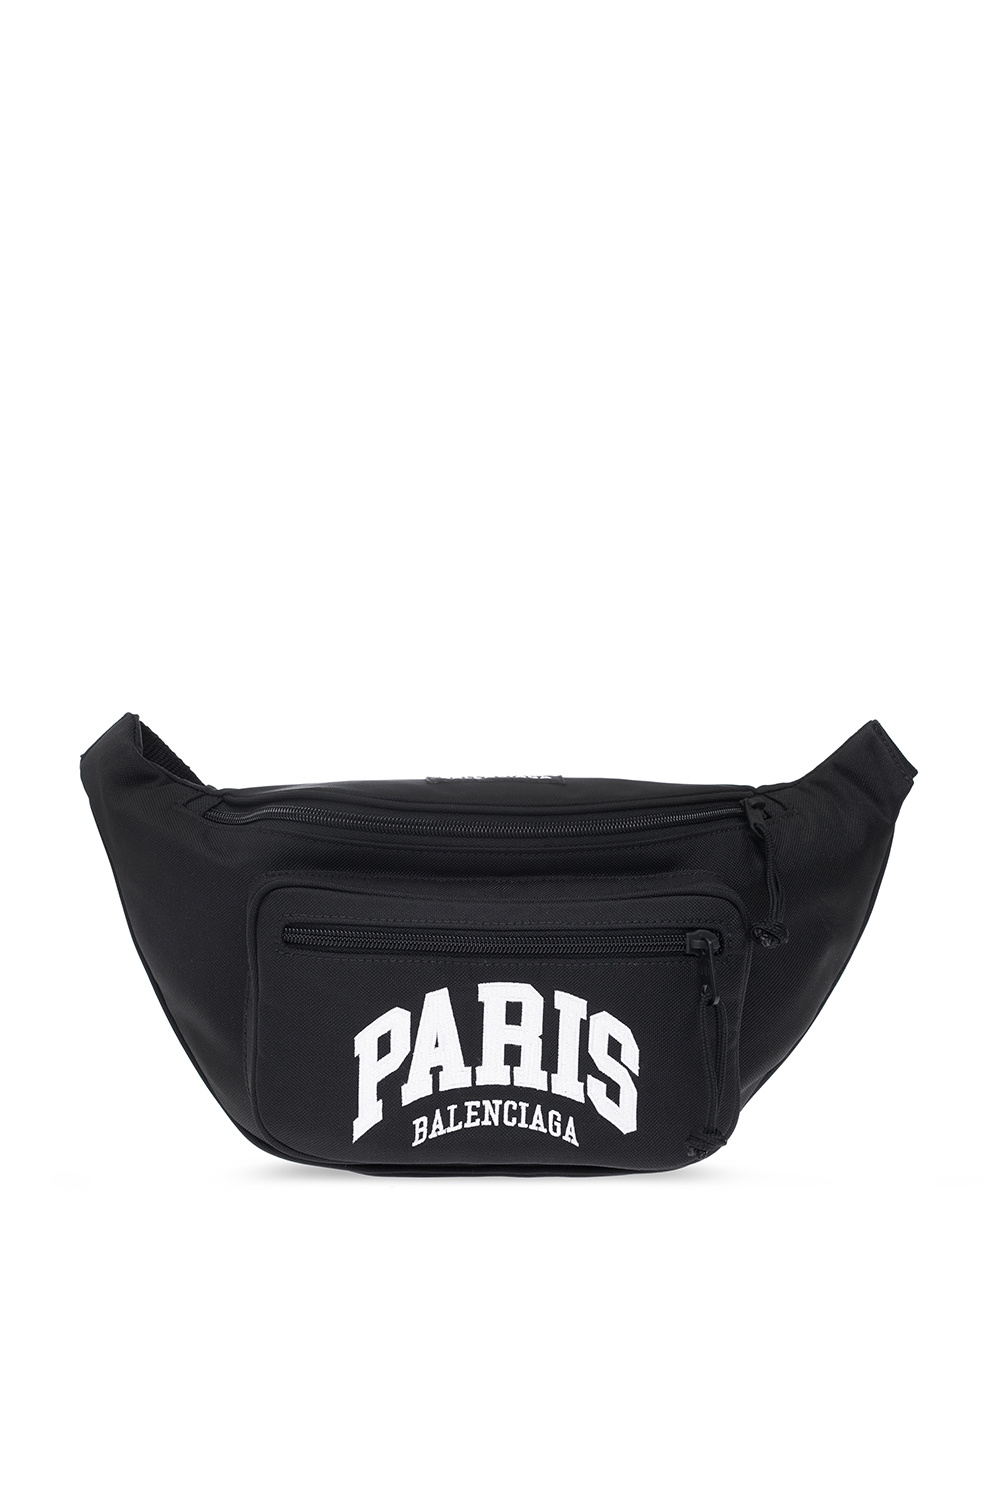 Balenciaga ‘Cities Paris Explorer’ belt bag